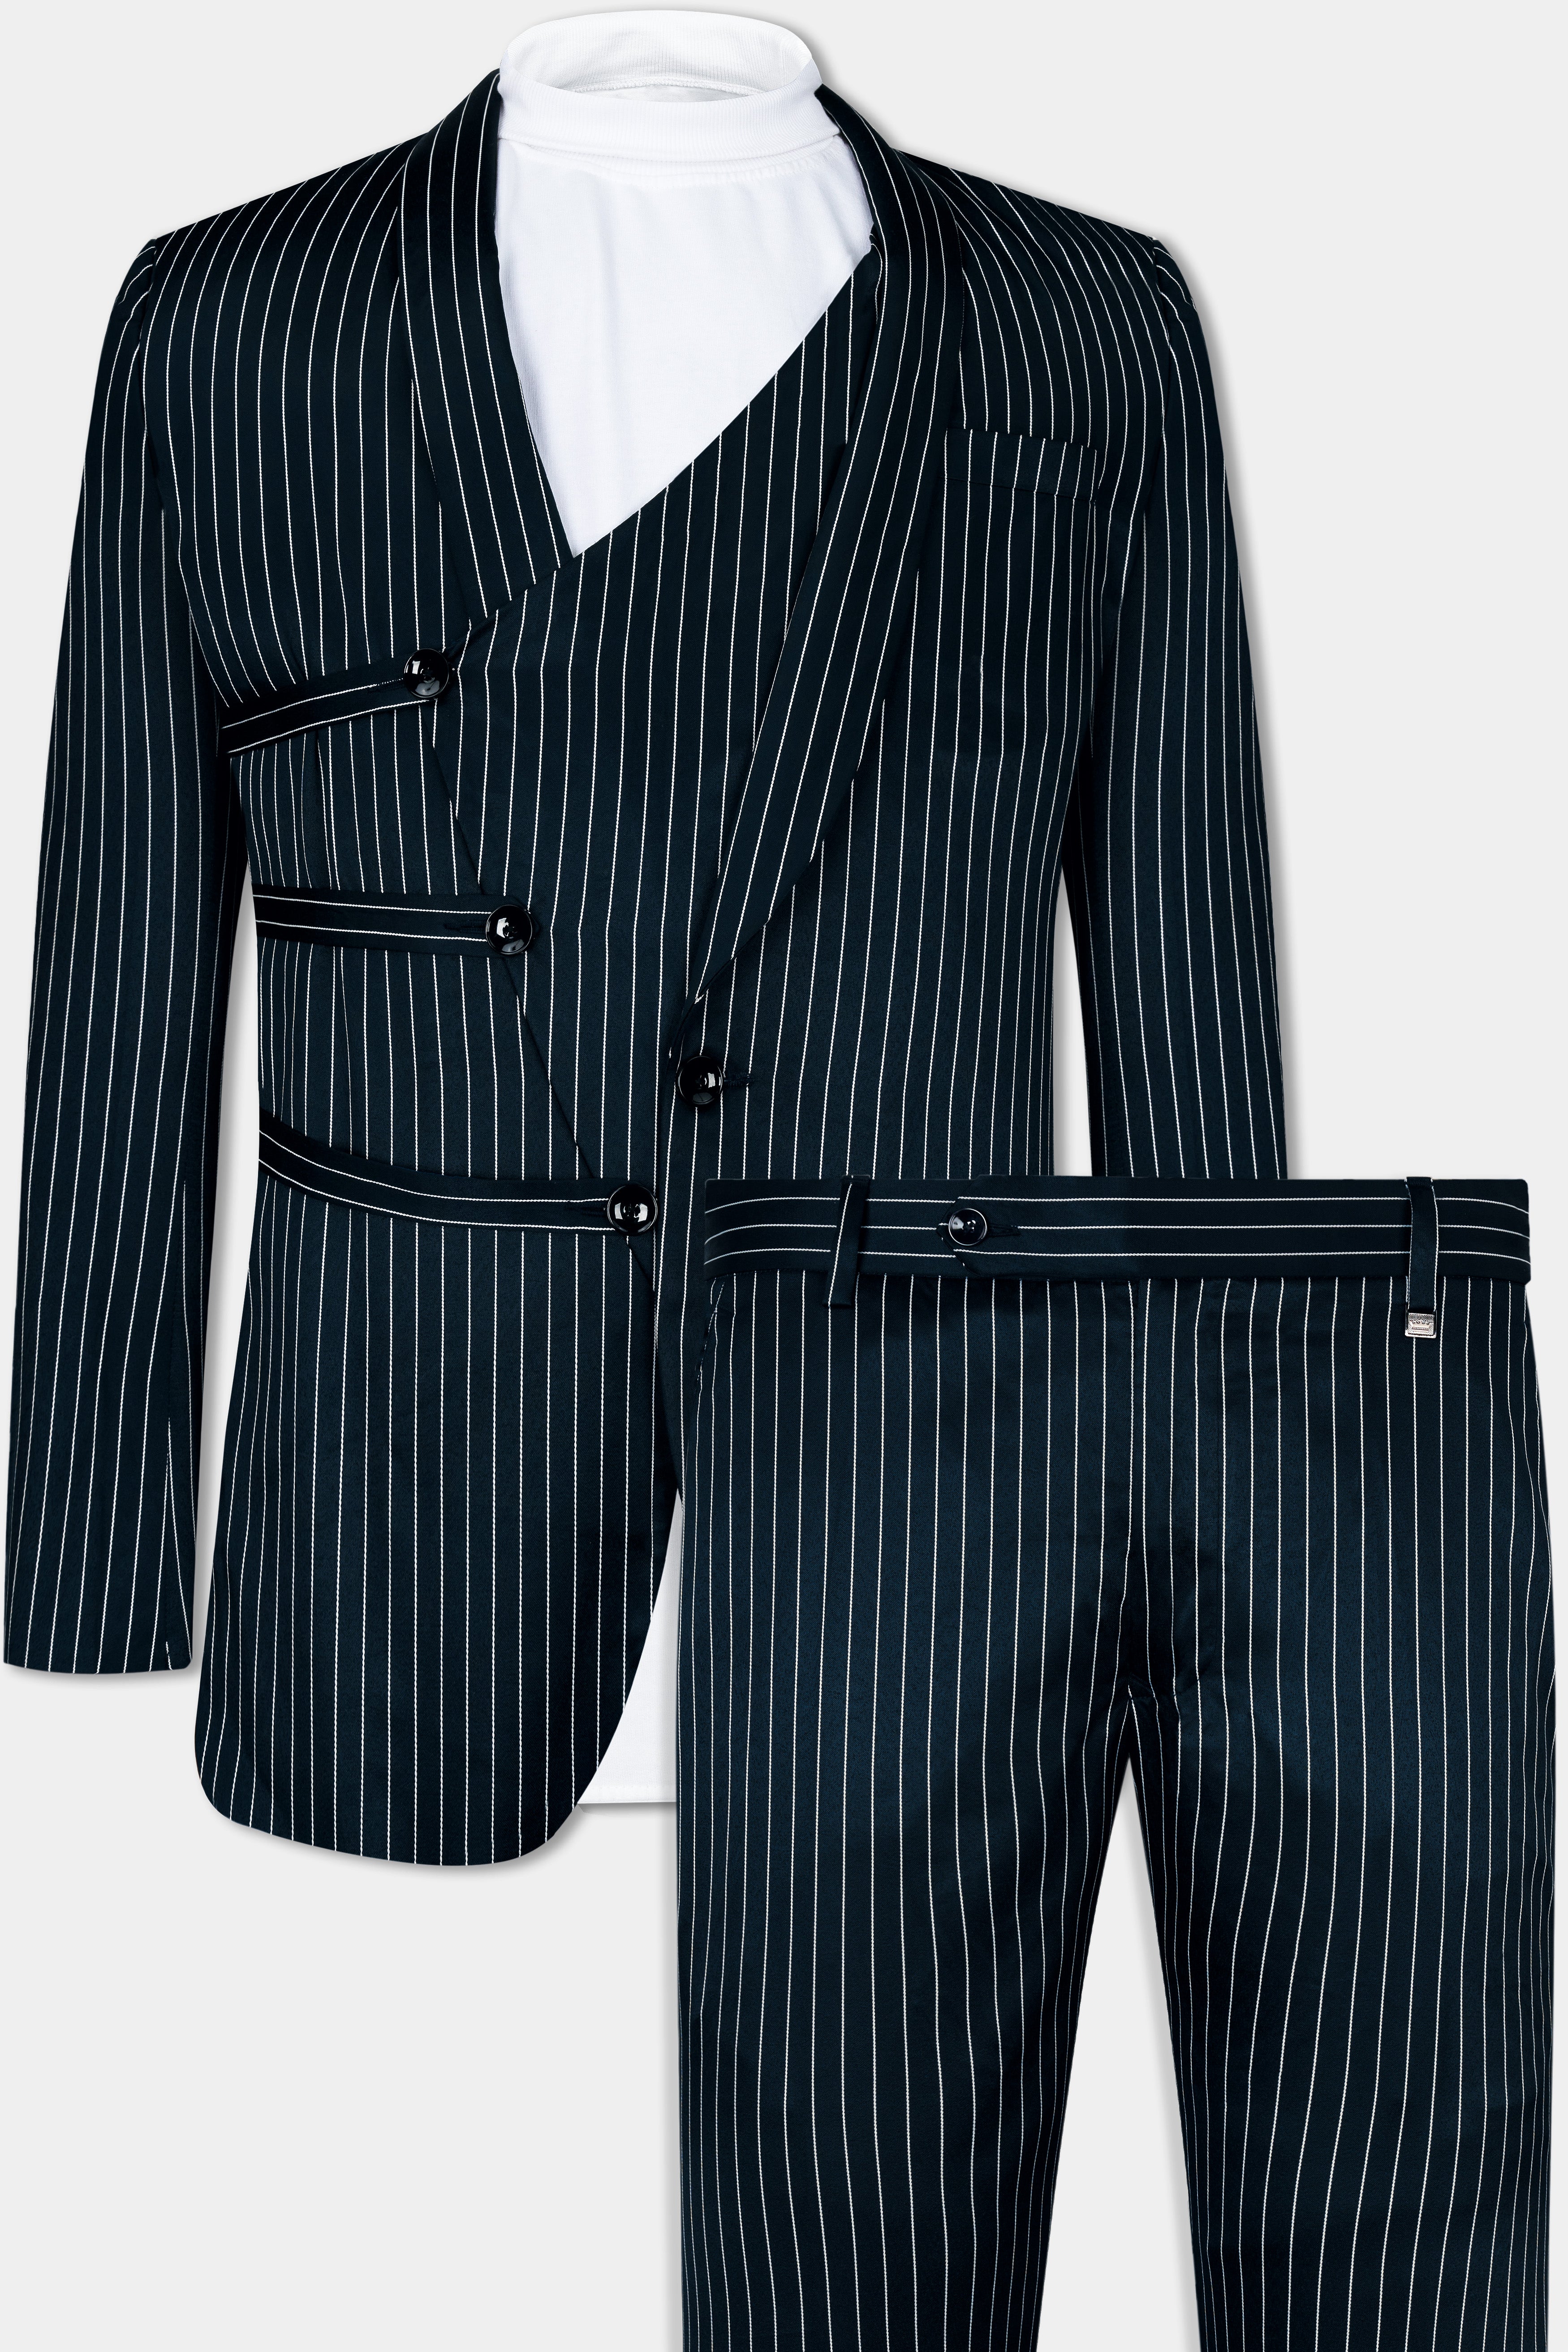 Gunmetal Blue with White Striped Premium Wool Rich Designer Suit ST2772-DB-D481-36, ST2772-DB-D481-38, ST2772-DB-D481-40, ST2772-DB-D481-42, ST2772-DB-D481-44, ST2772-DB-D481-46, ST2772-DB-D481-48, ST2772-DB-D481-50, ST2772-DB-D481-52, ST2772-DB-D481-54, ST2772-DB-D481-56, ST2772-DB-D481-58, ST2772-DB-D481-60